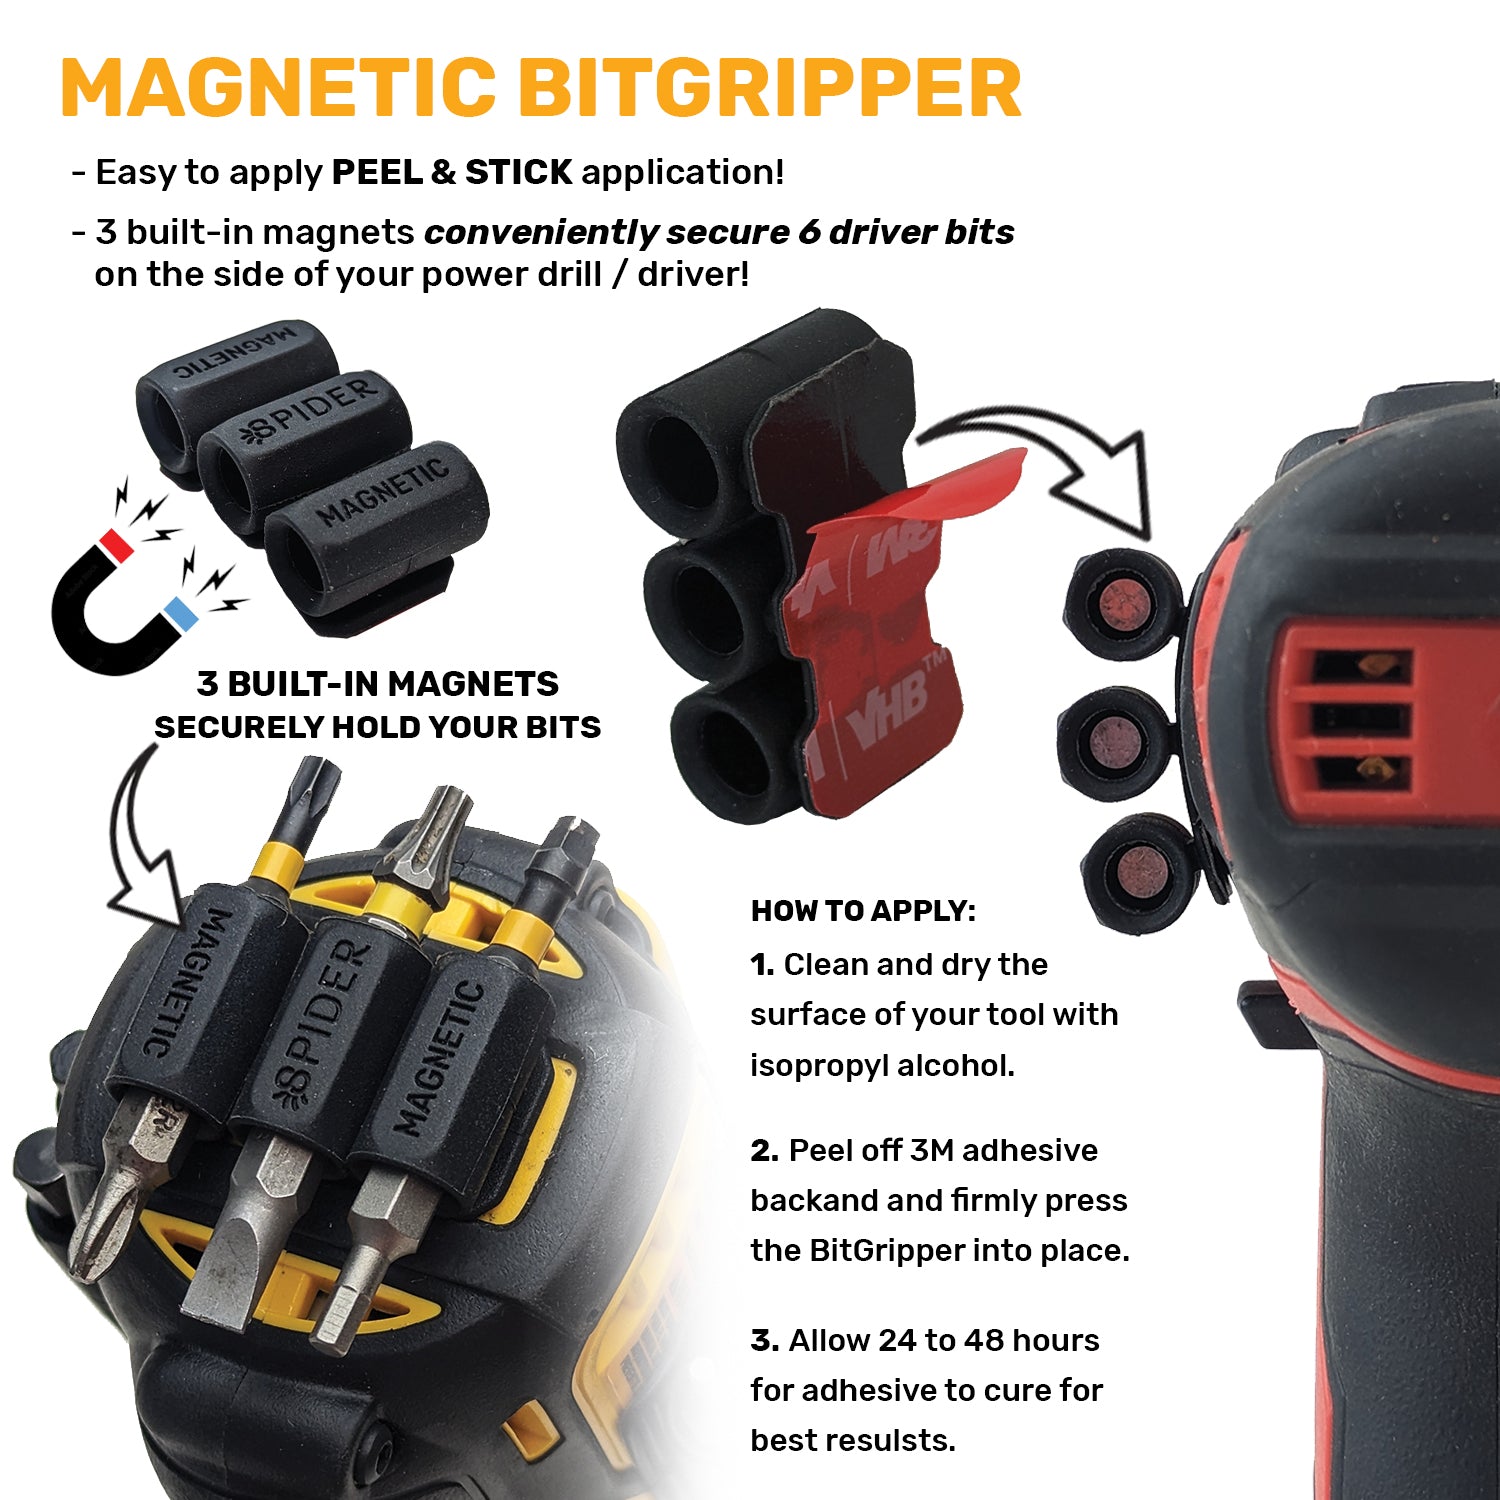 Magnetic BitGripper